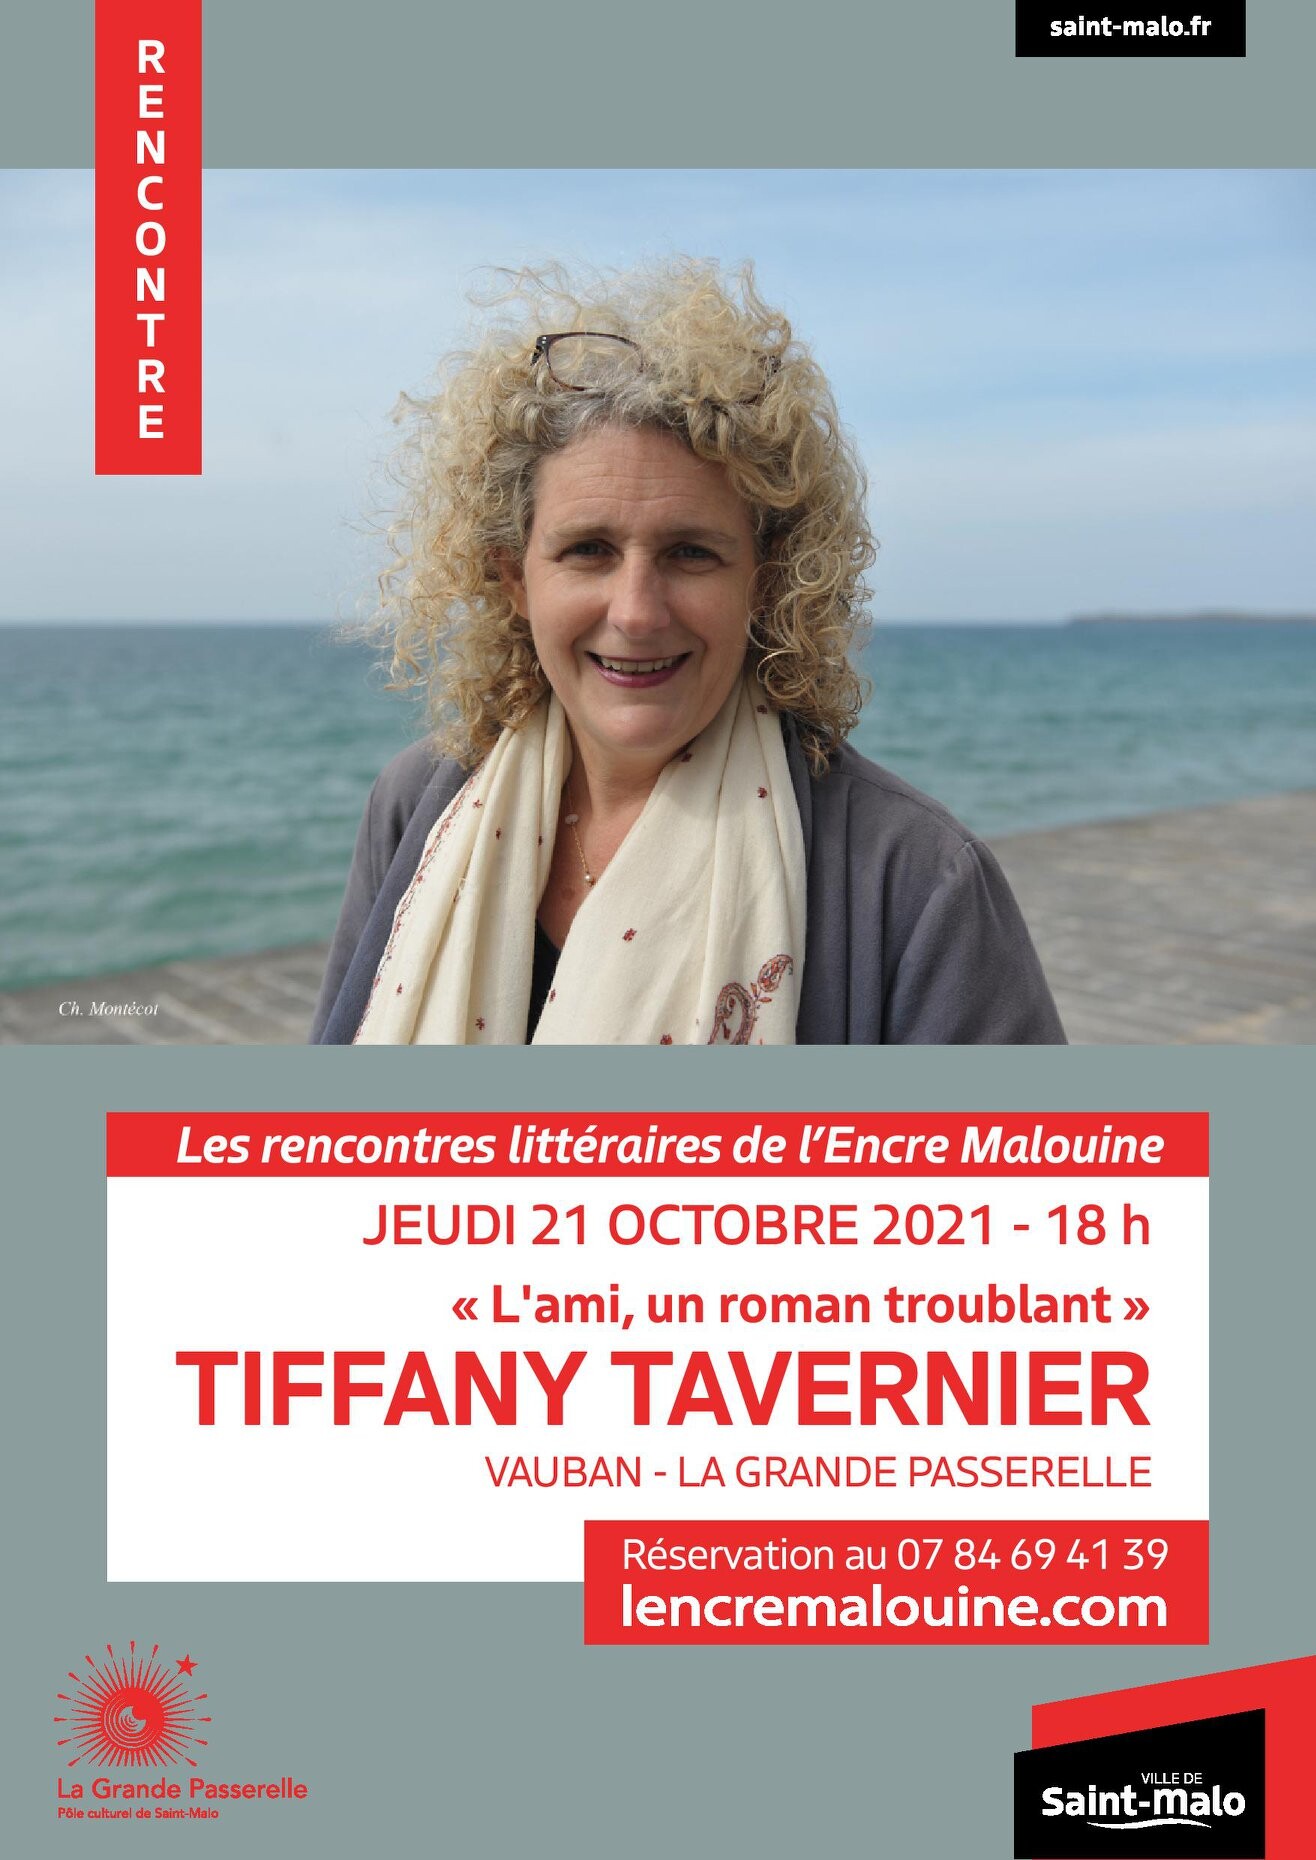 Tiffany Tavernier